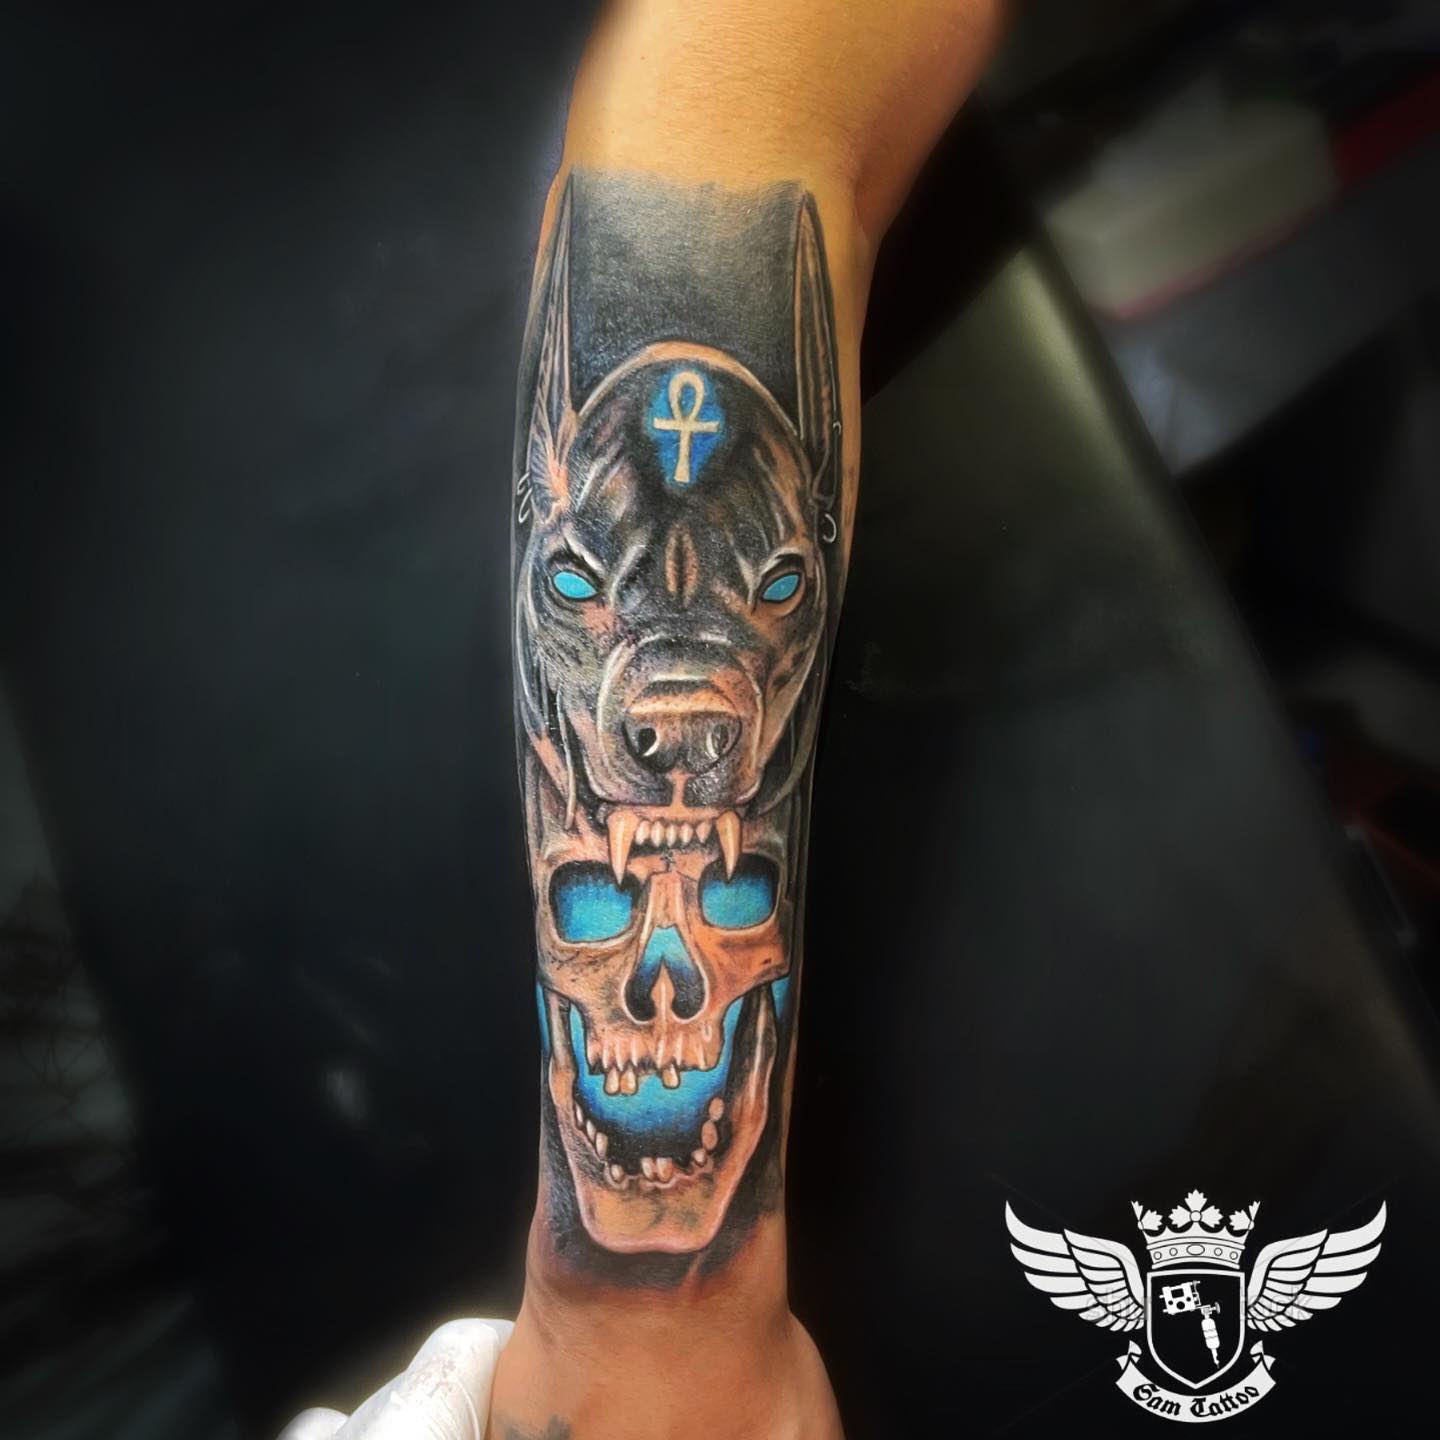 Skull and blue vibes make this Anubis tattoo amazing.